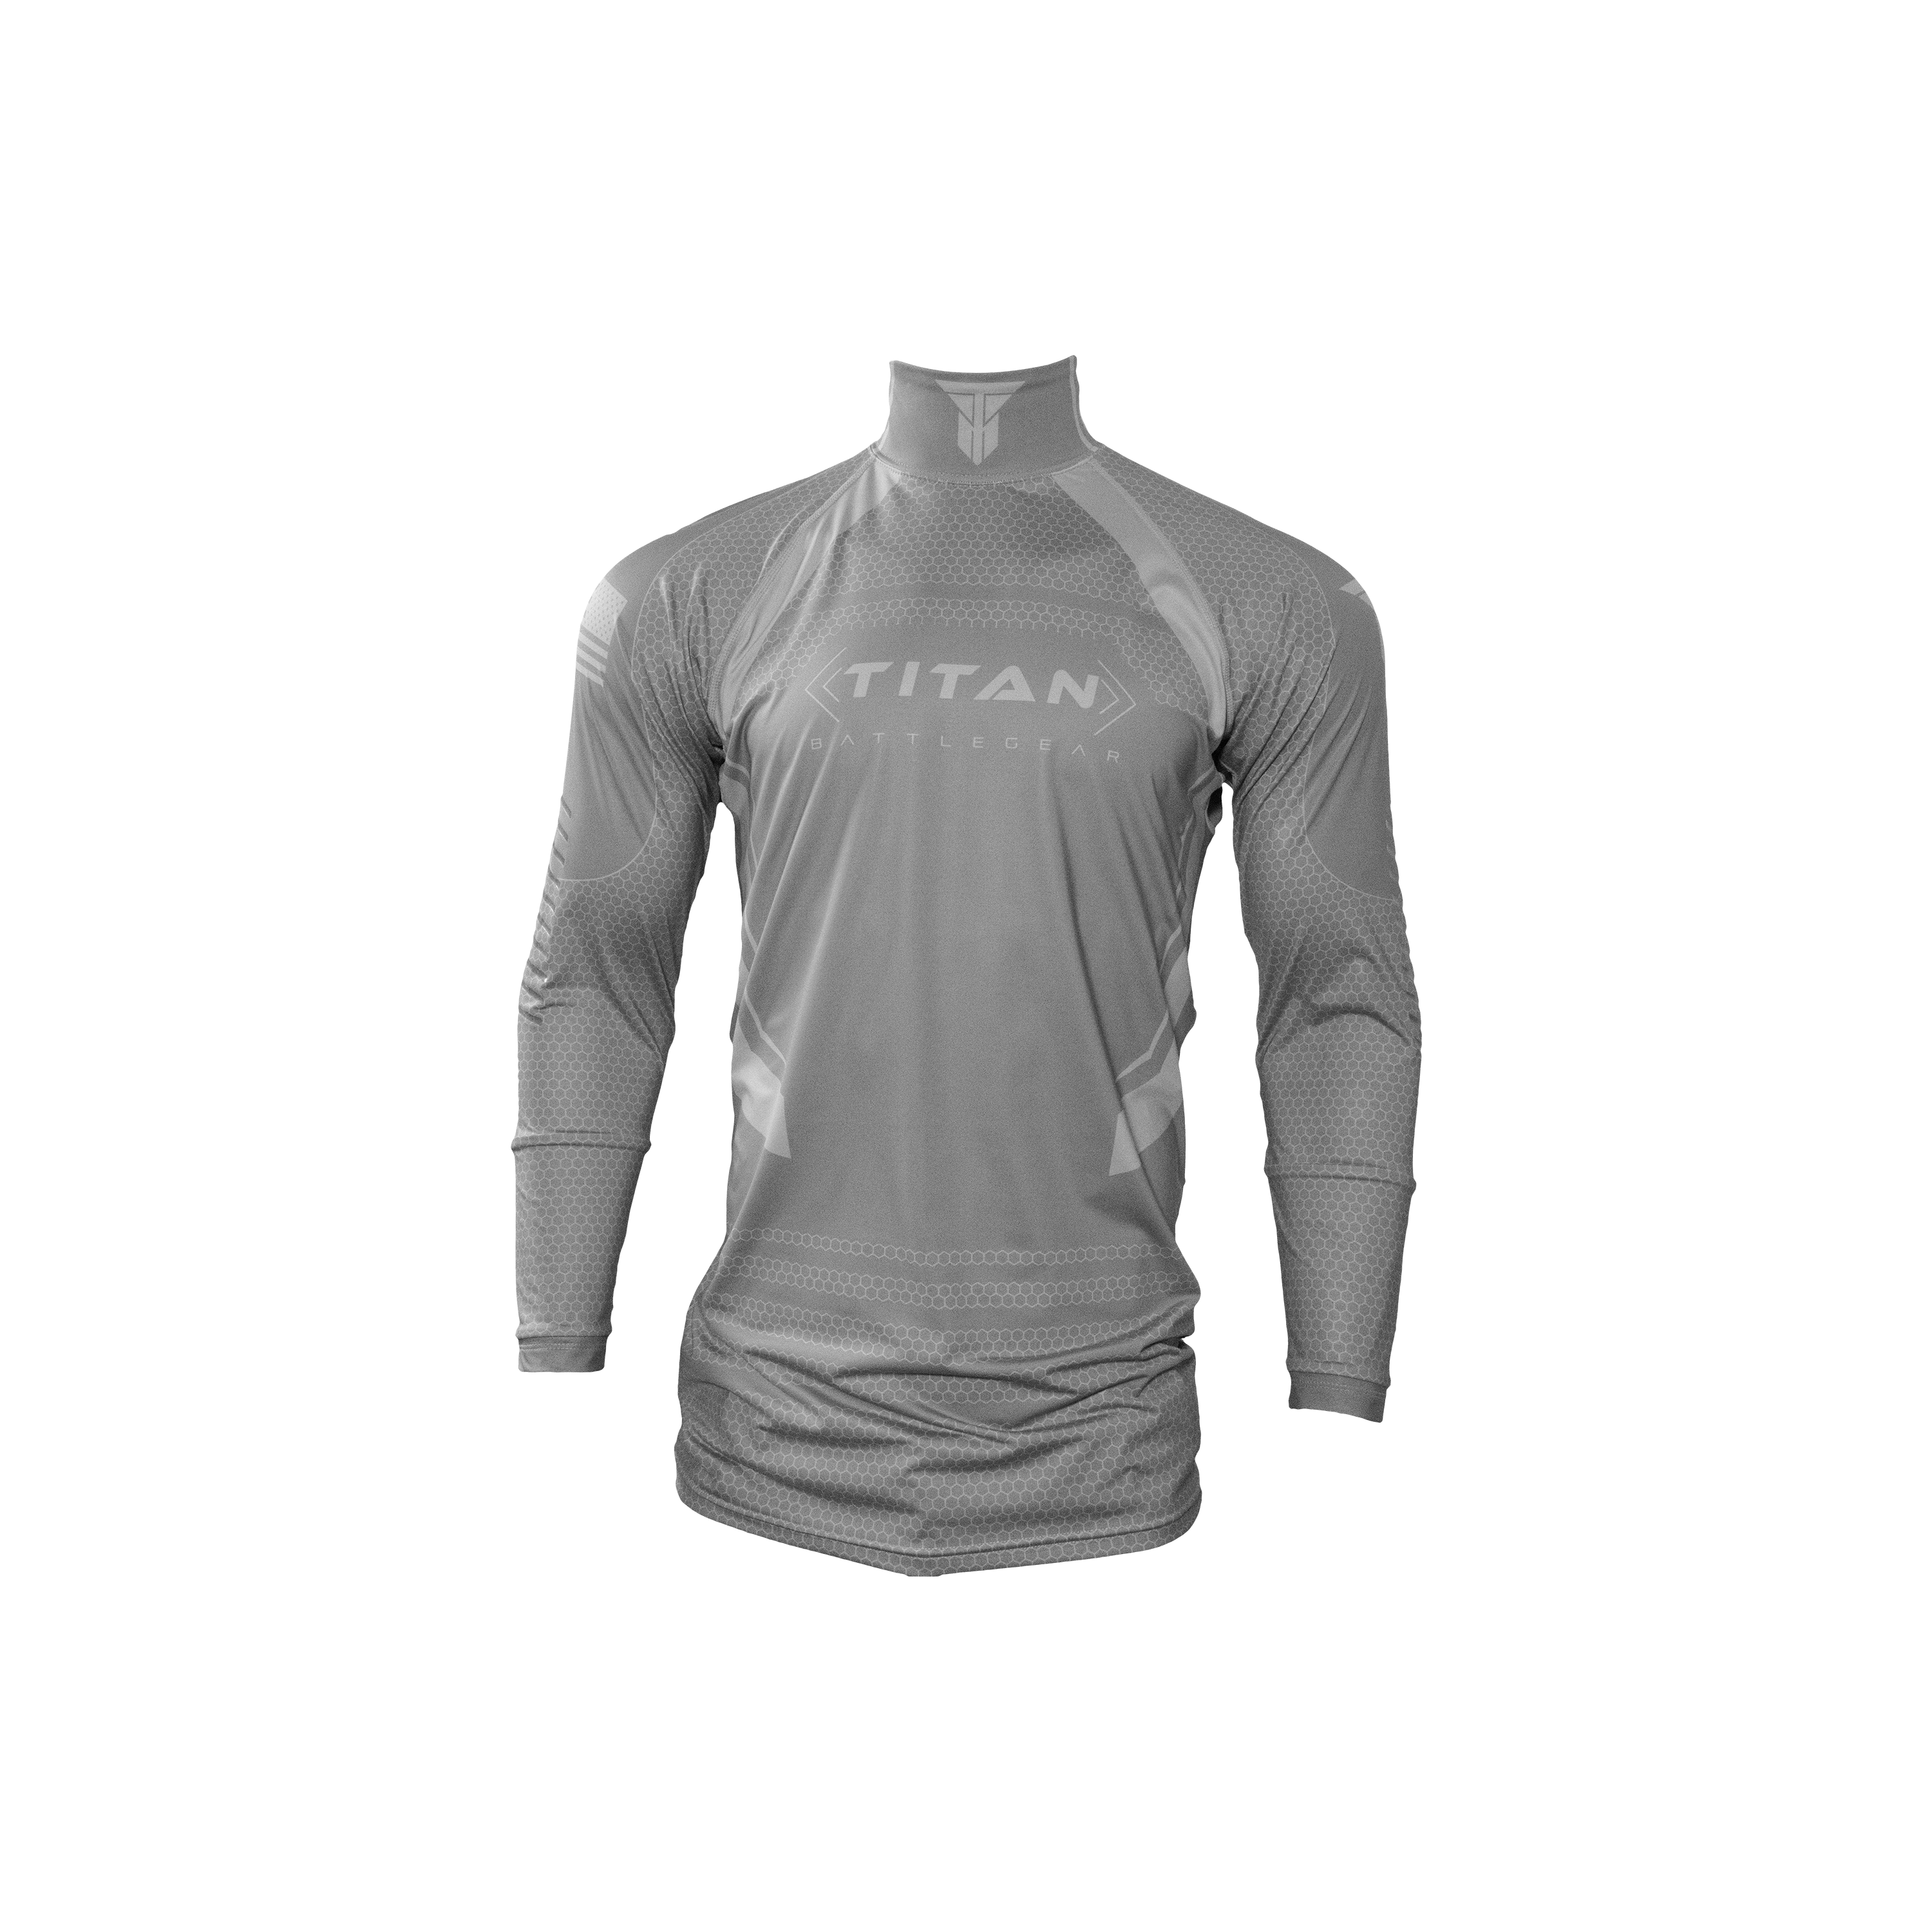 front mockup of Titan Battlegear hockey neck guard shirt in gray